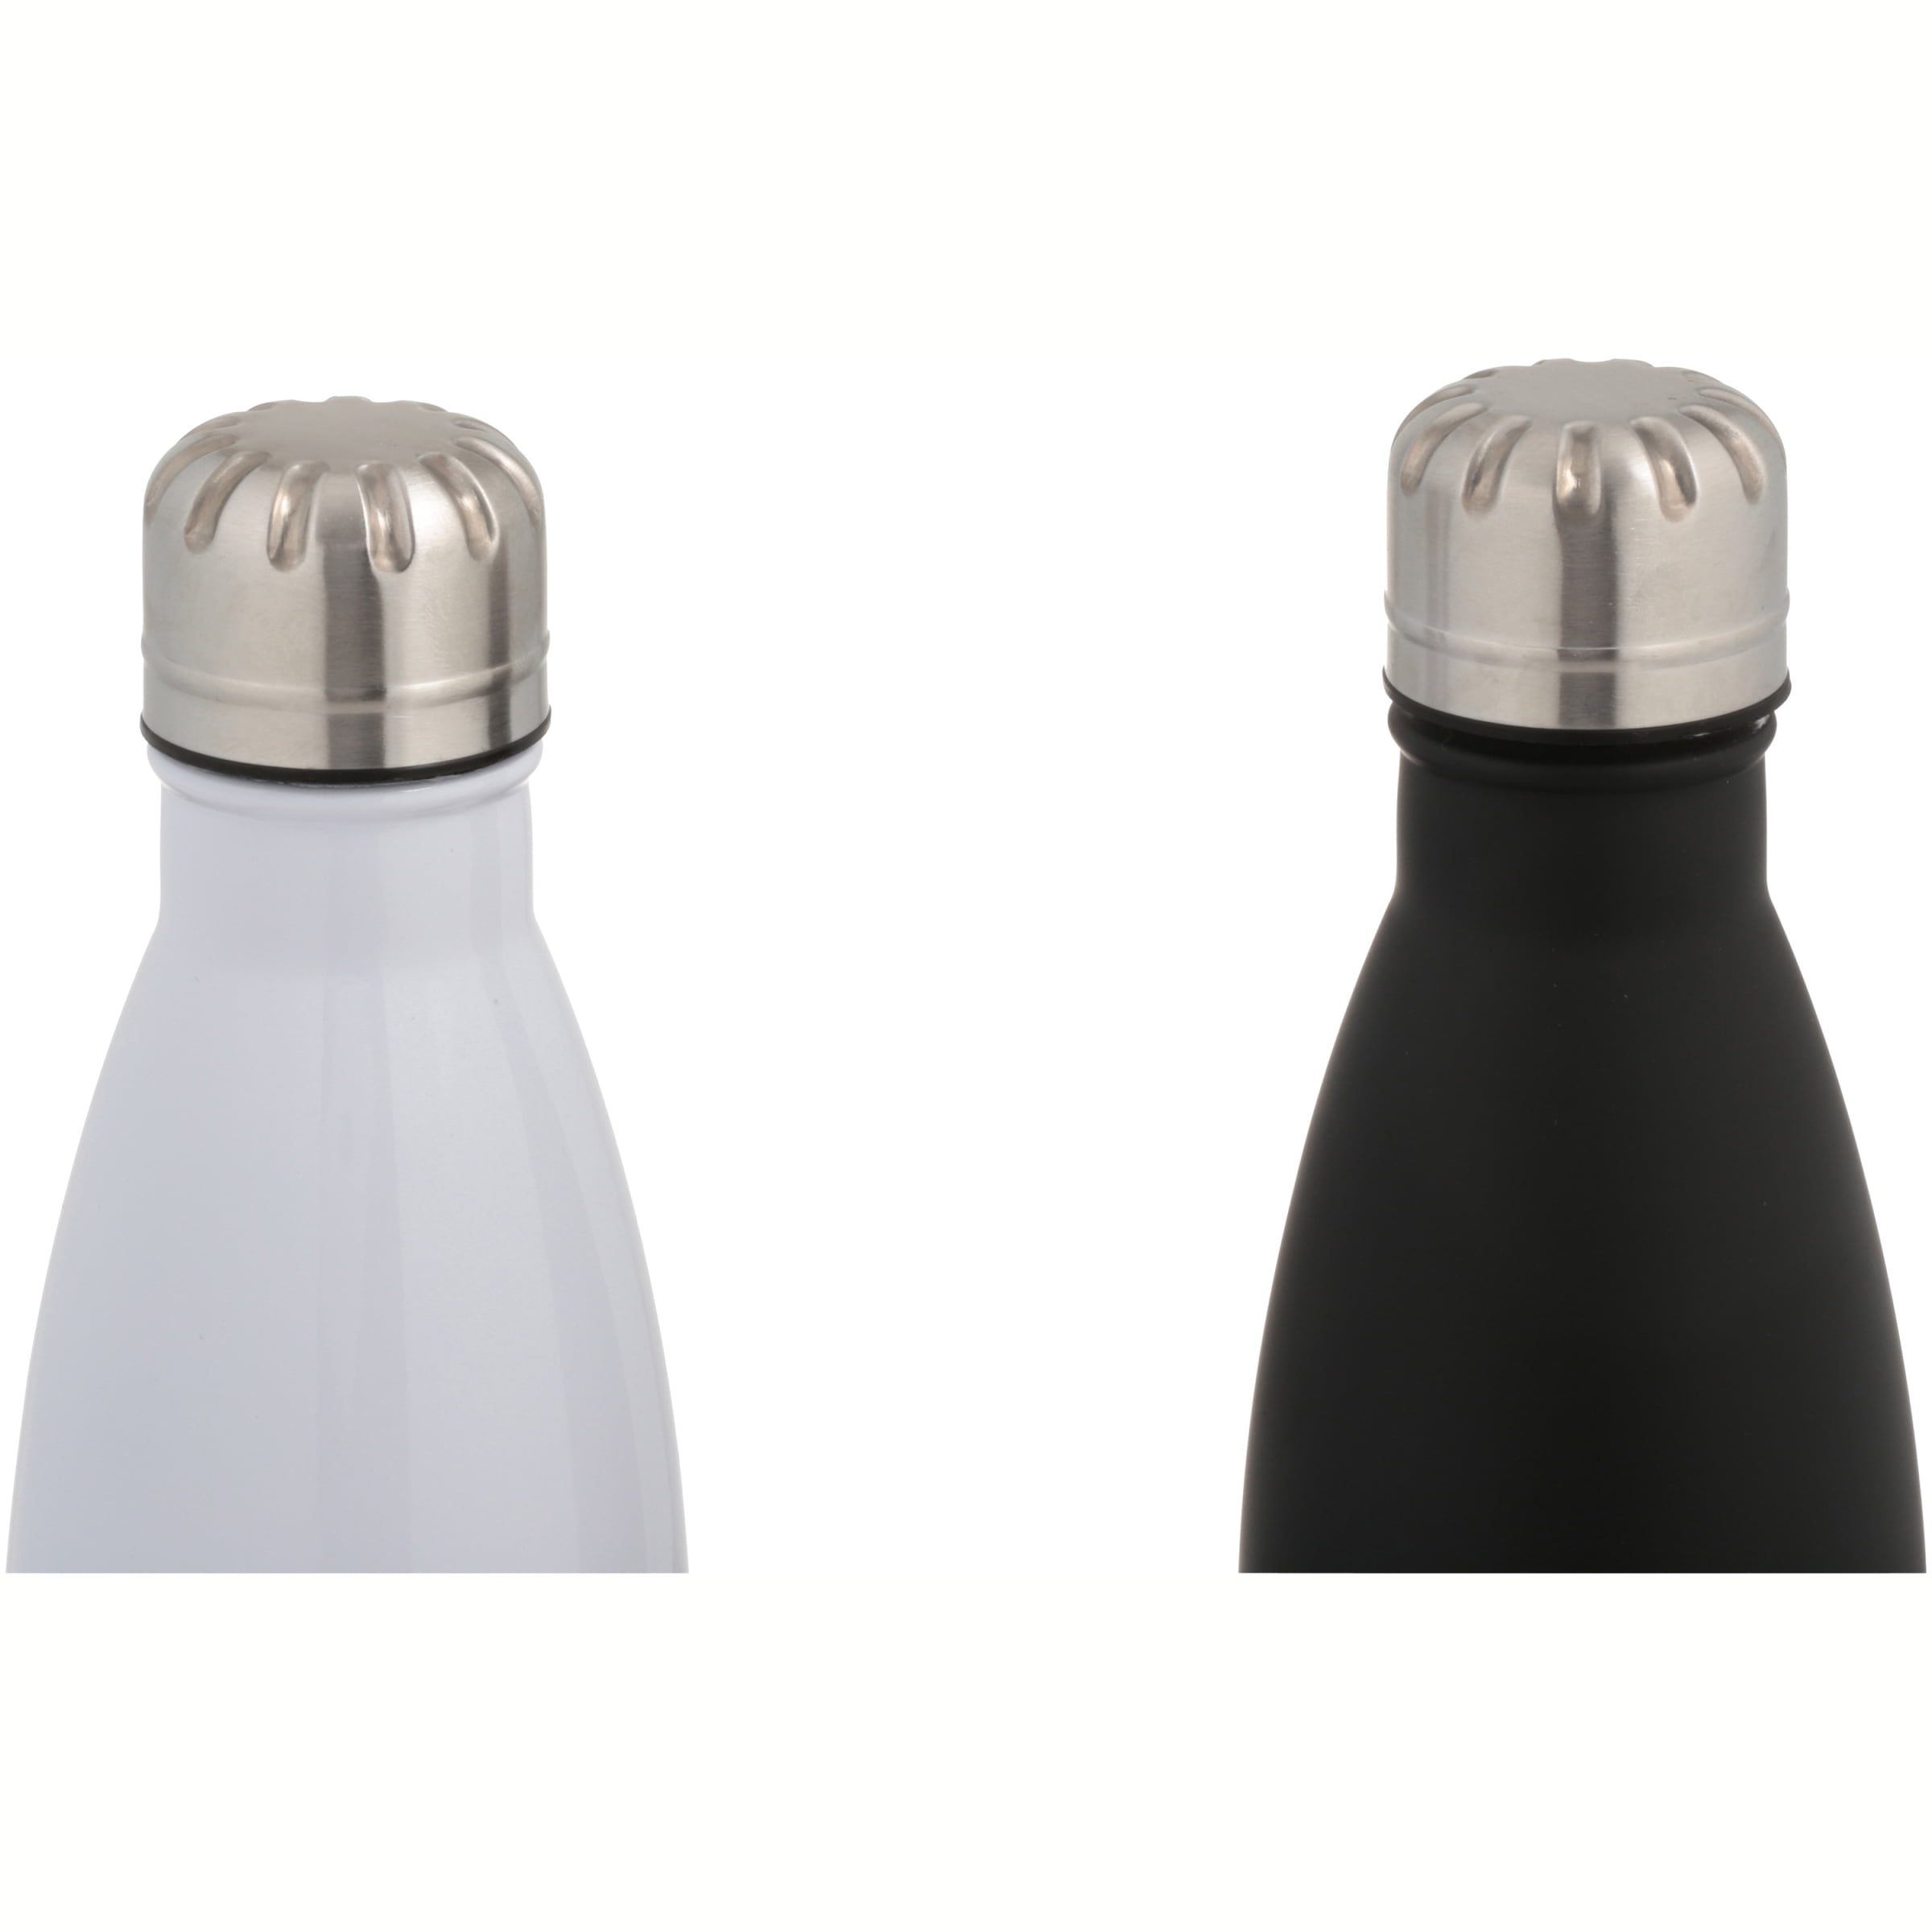 17 oz Retro Water Bottle Black – Iron Flask